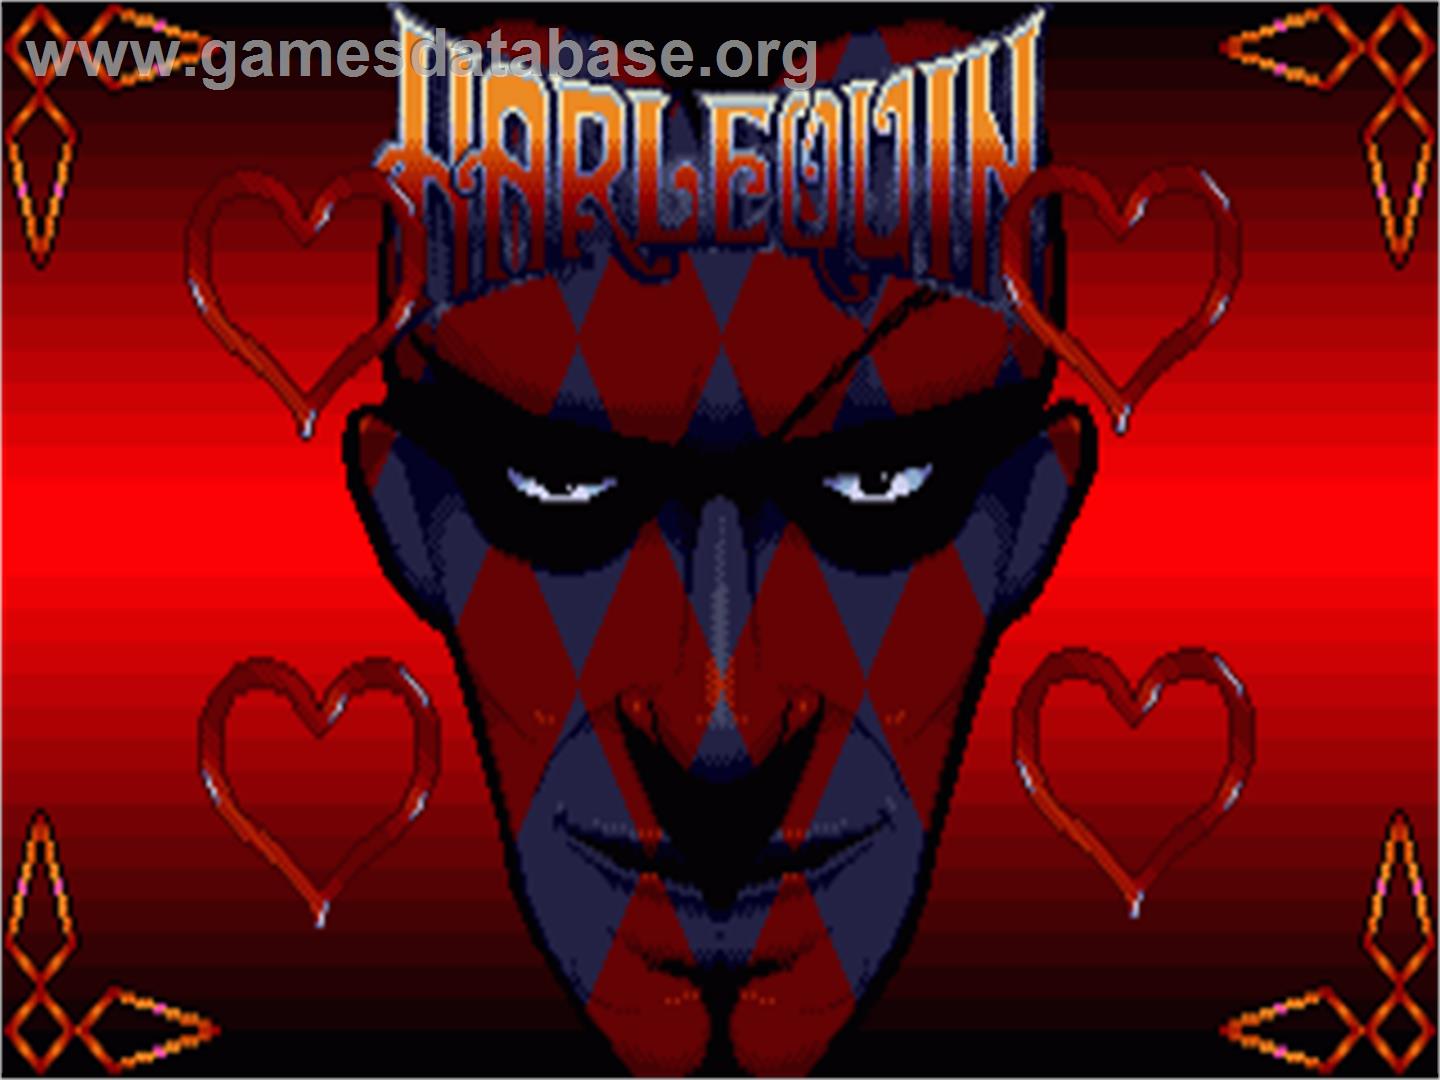 Harlequin - Commodore Amiga - Artwork - Title Screen